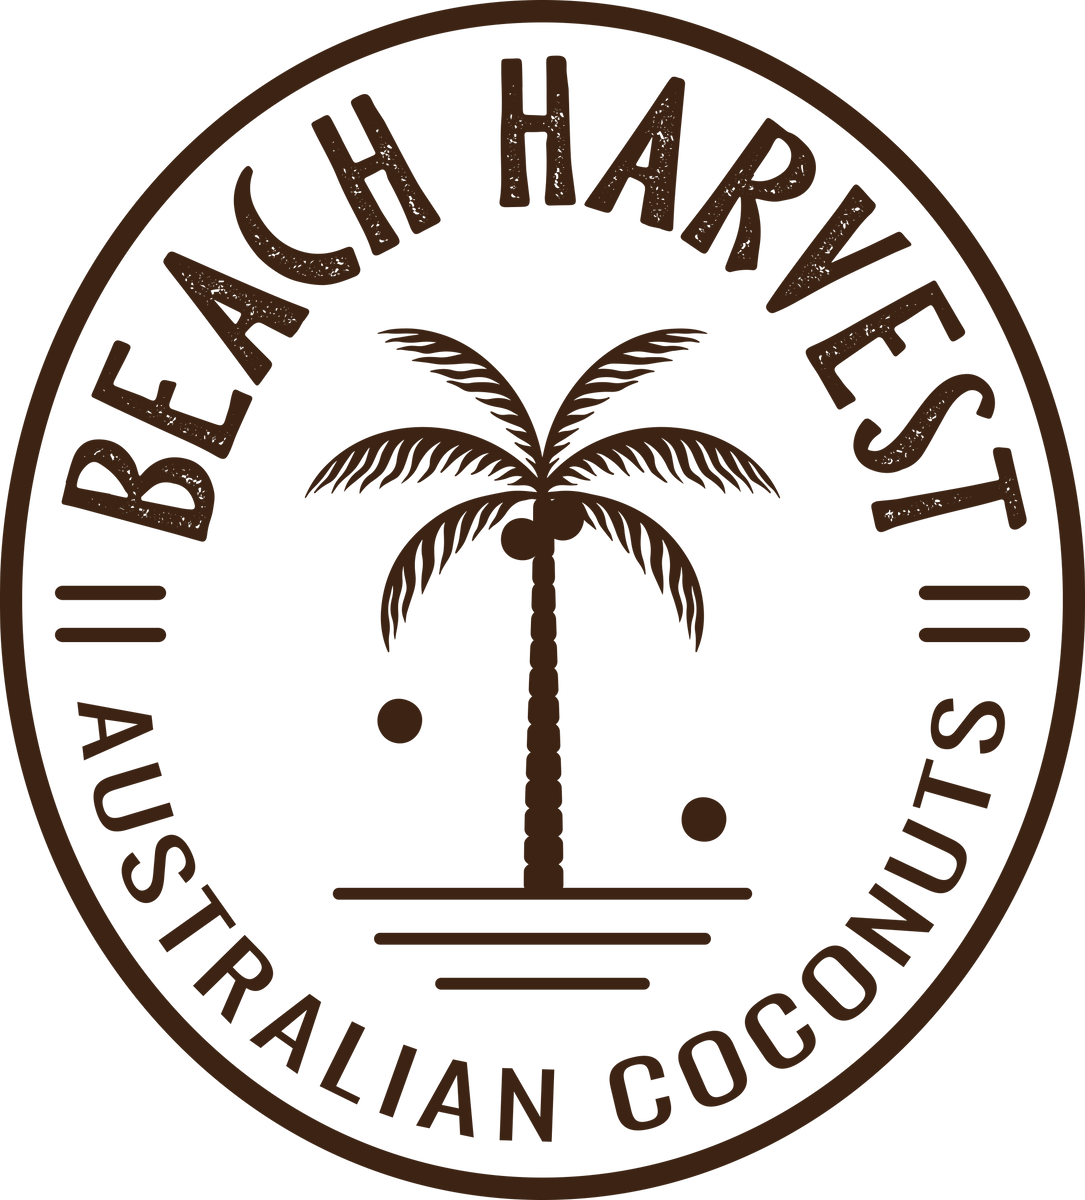 Australian-grown Coconuts: Coconut Chips, Granola, Muesli and